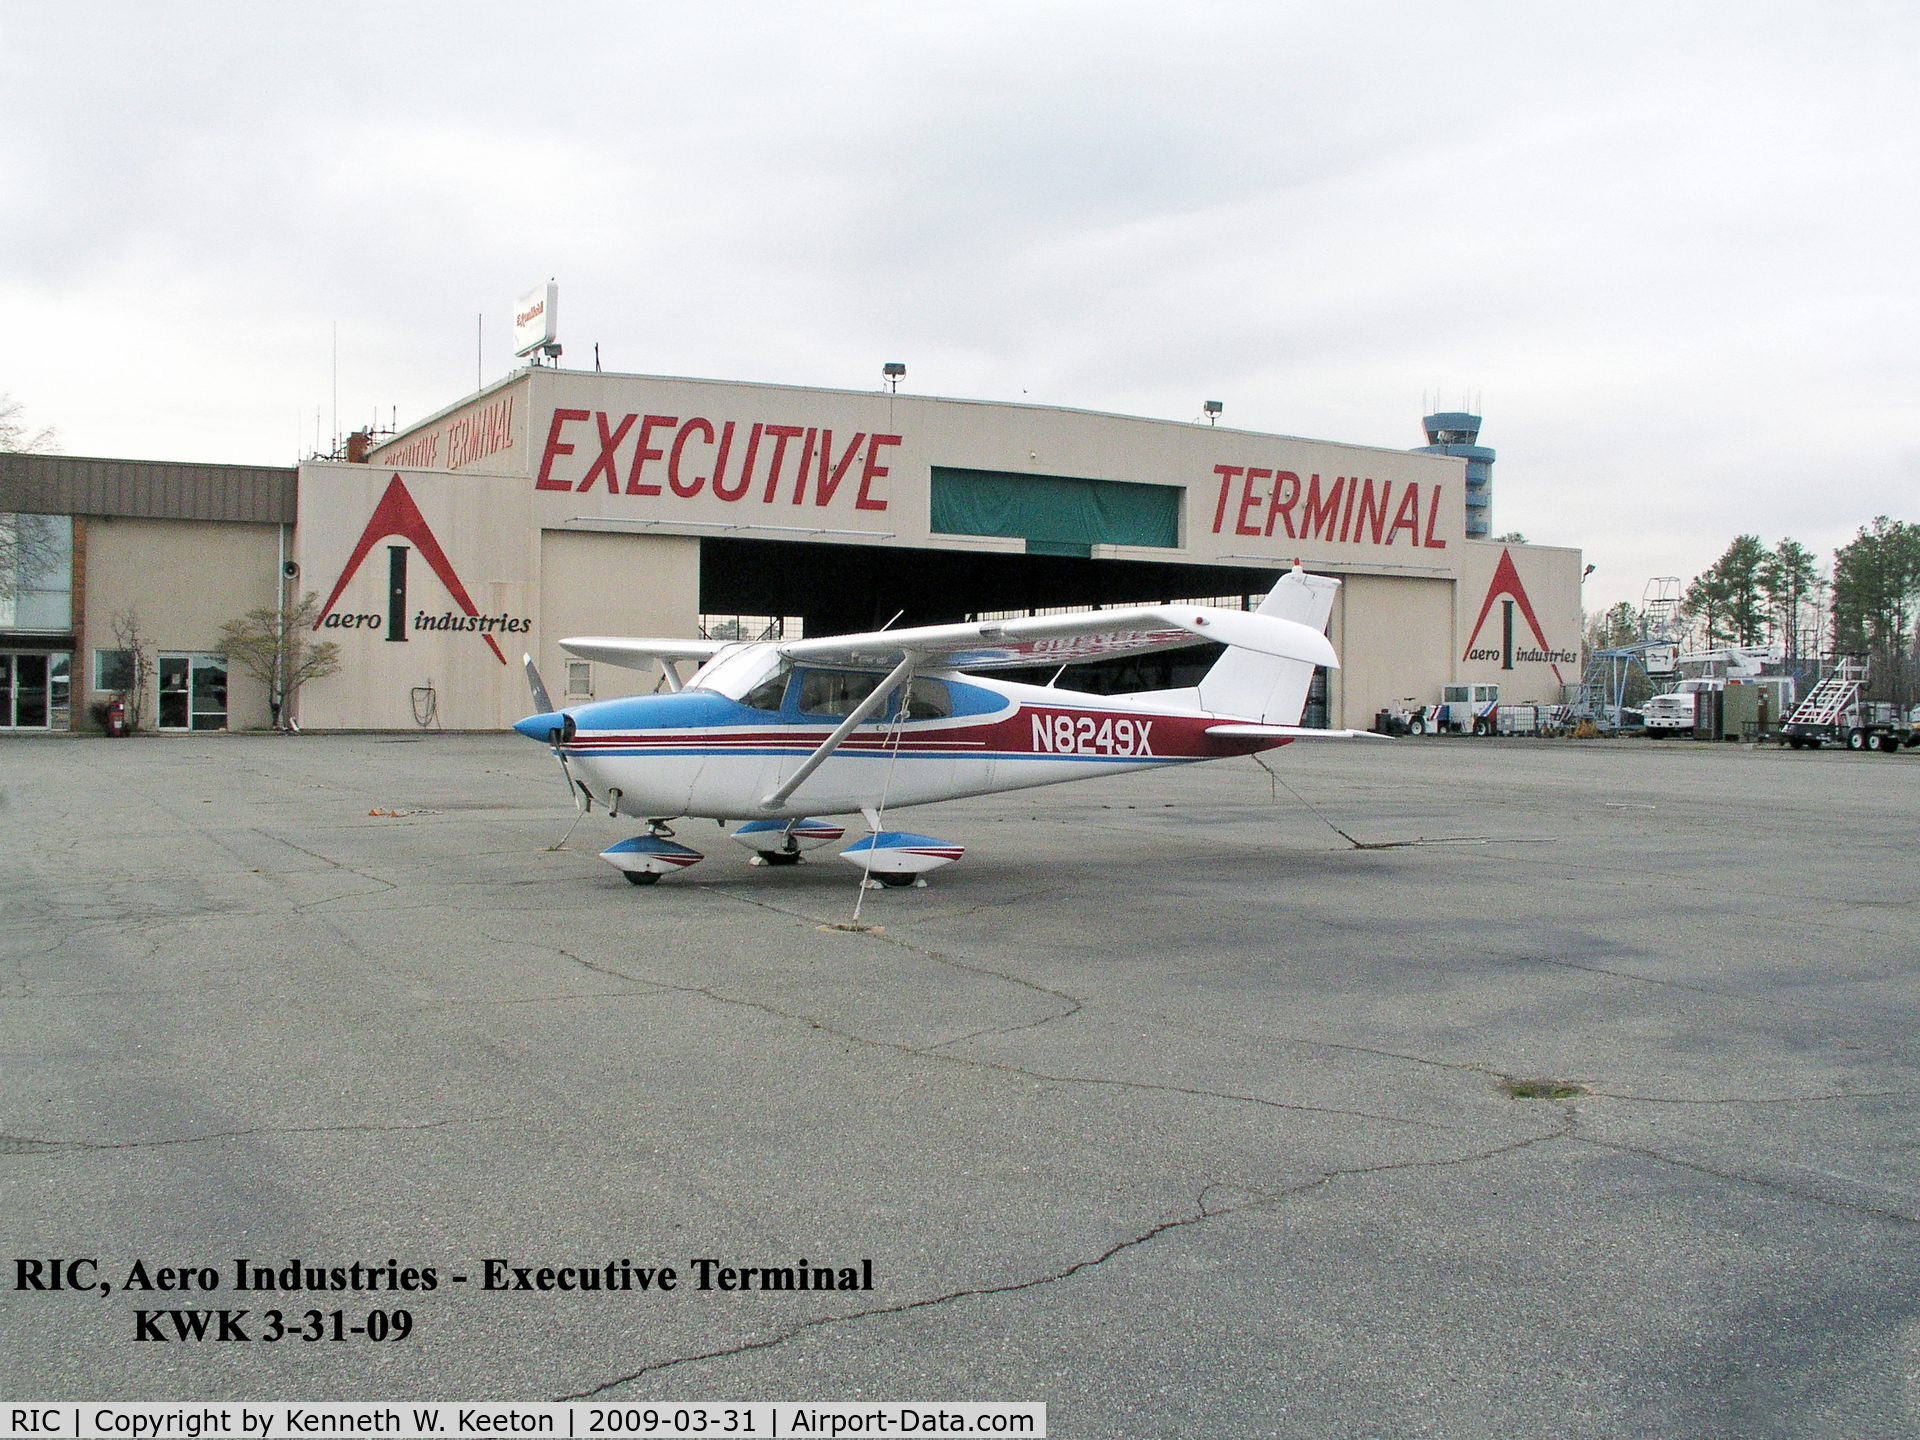 Richmond International Airport (RIC) - RIC, Aero Industries - Executive Terminal
Photo by Kenneth W. Keeton 3-31-09.